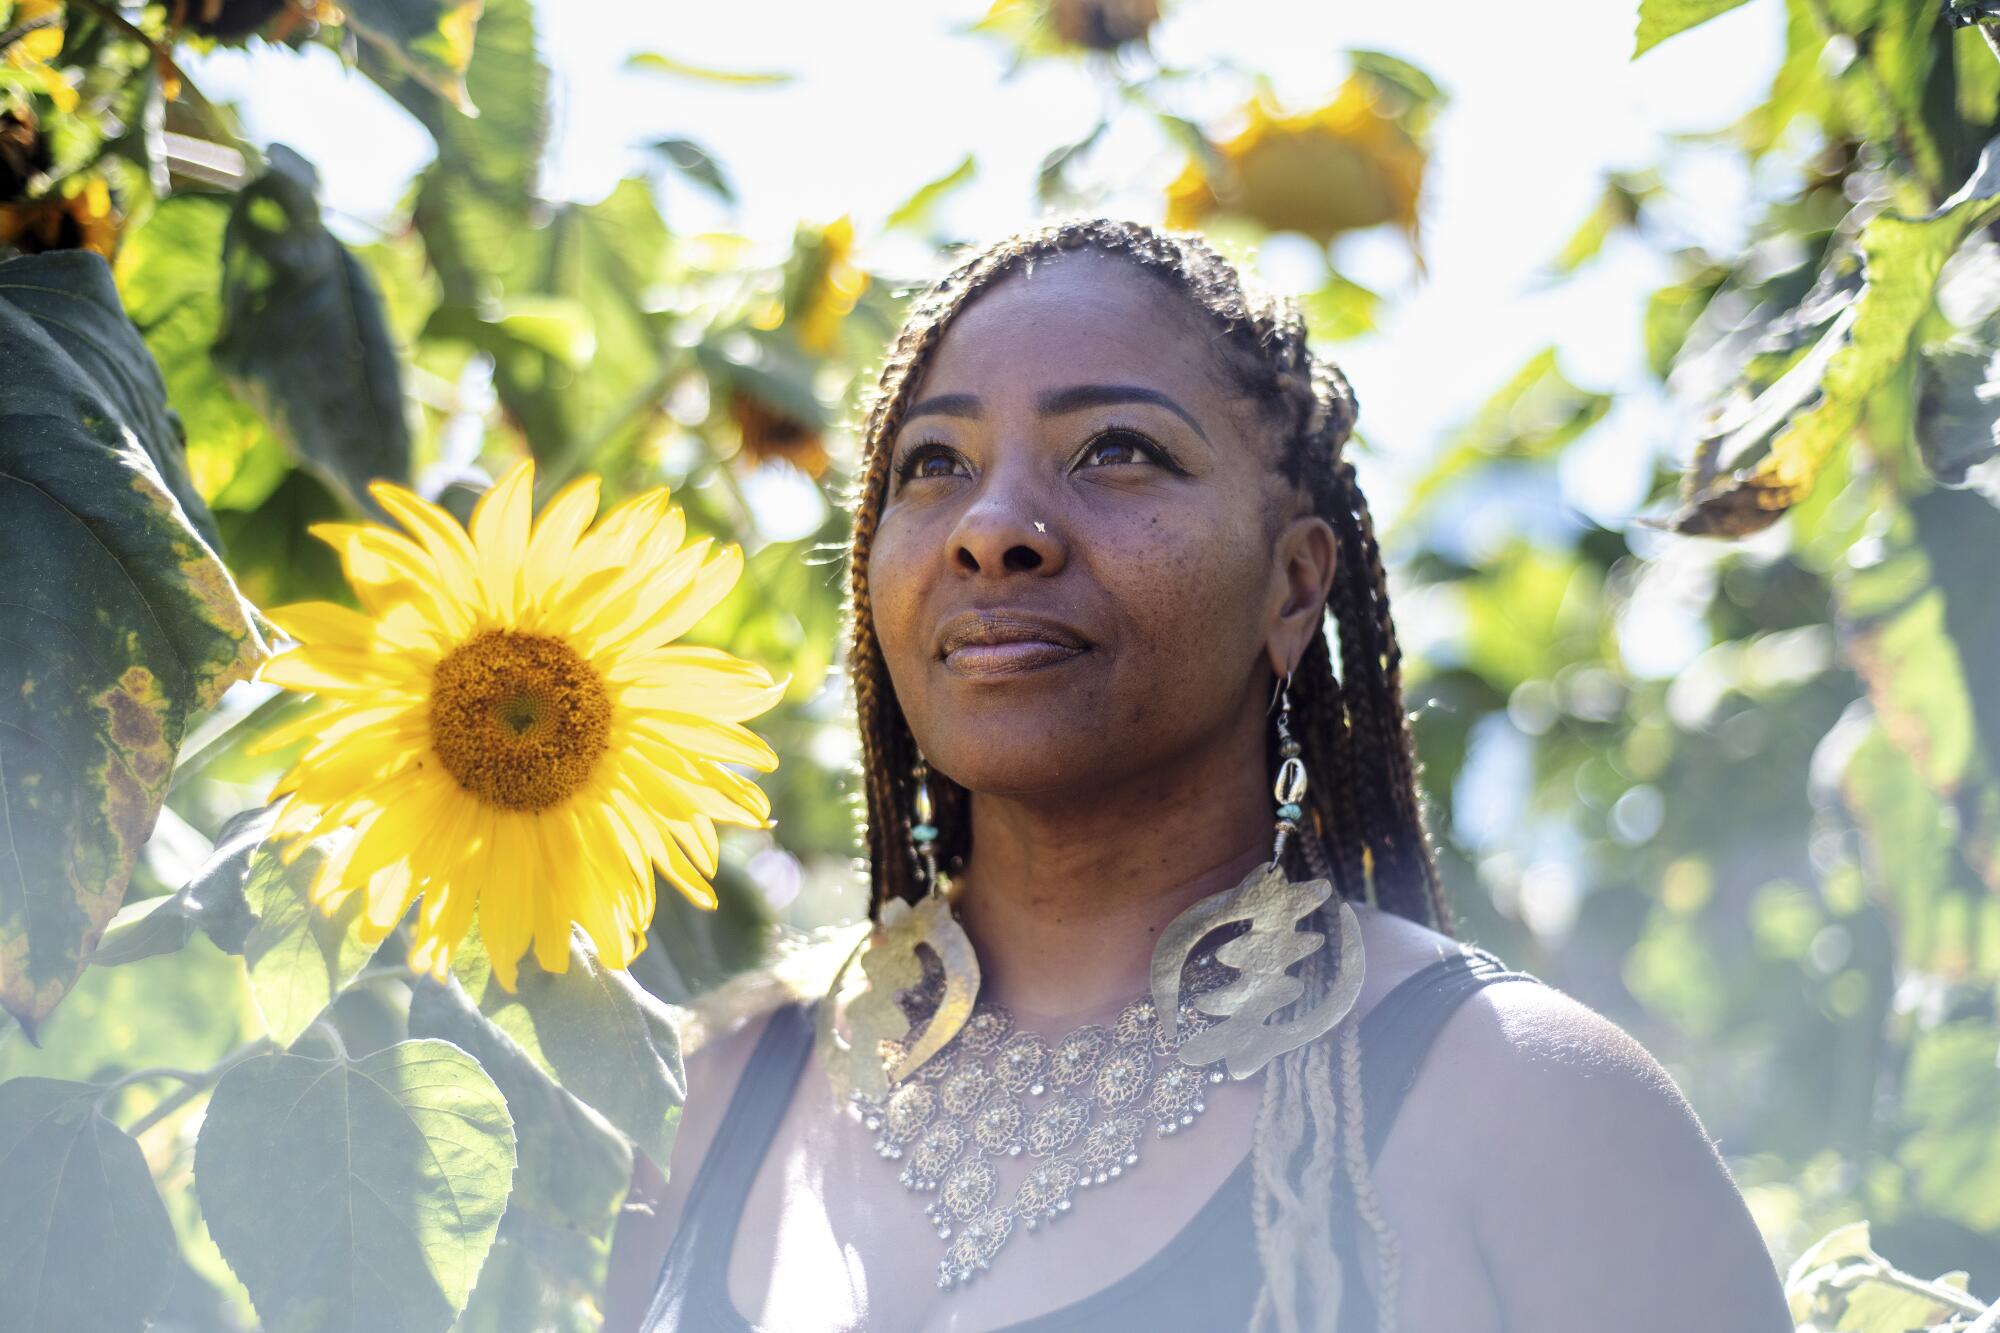 Genea Richardson stands amid sunflowers, looking upward.